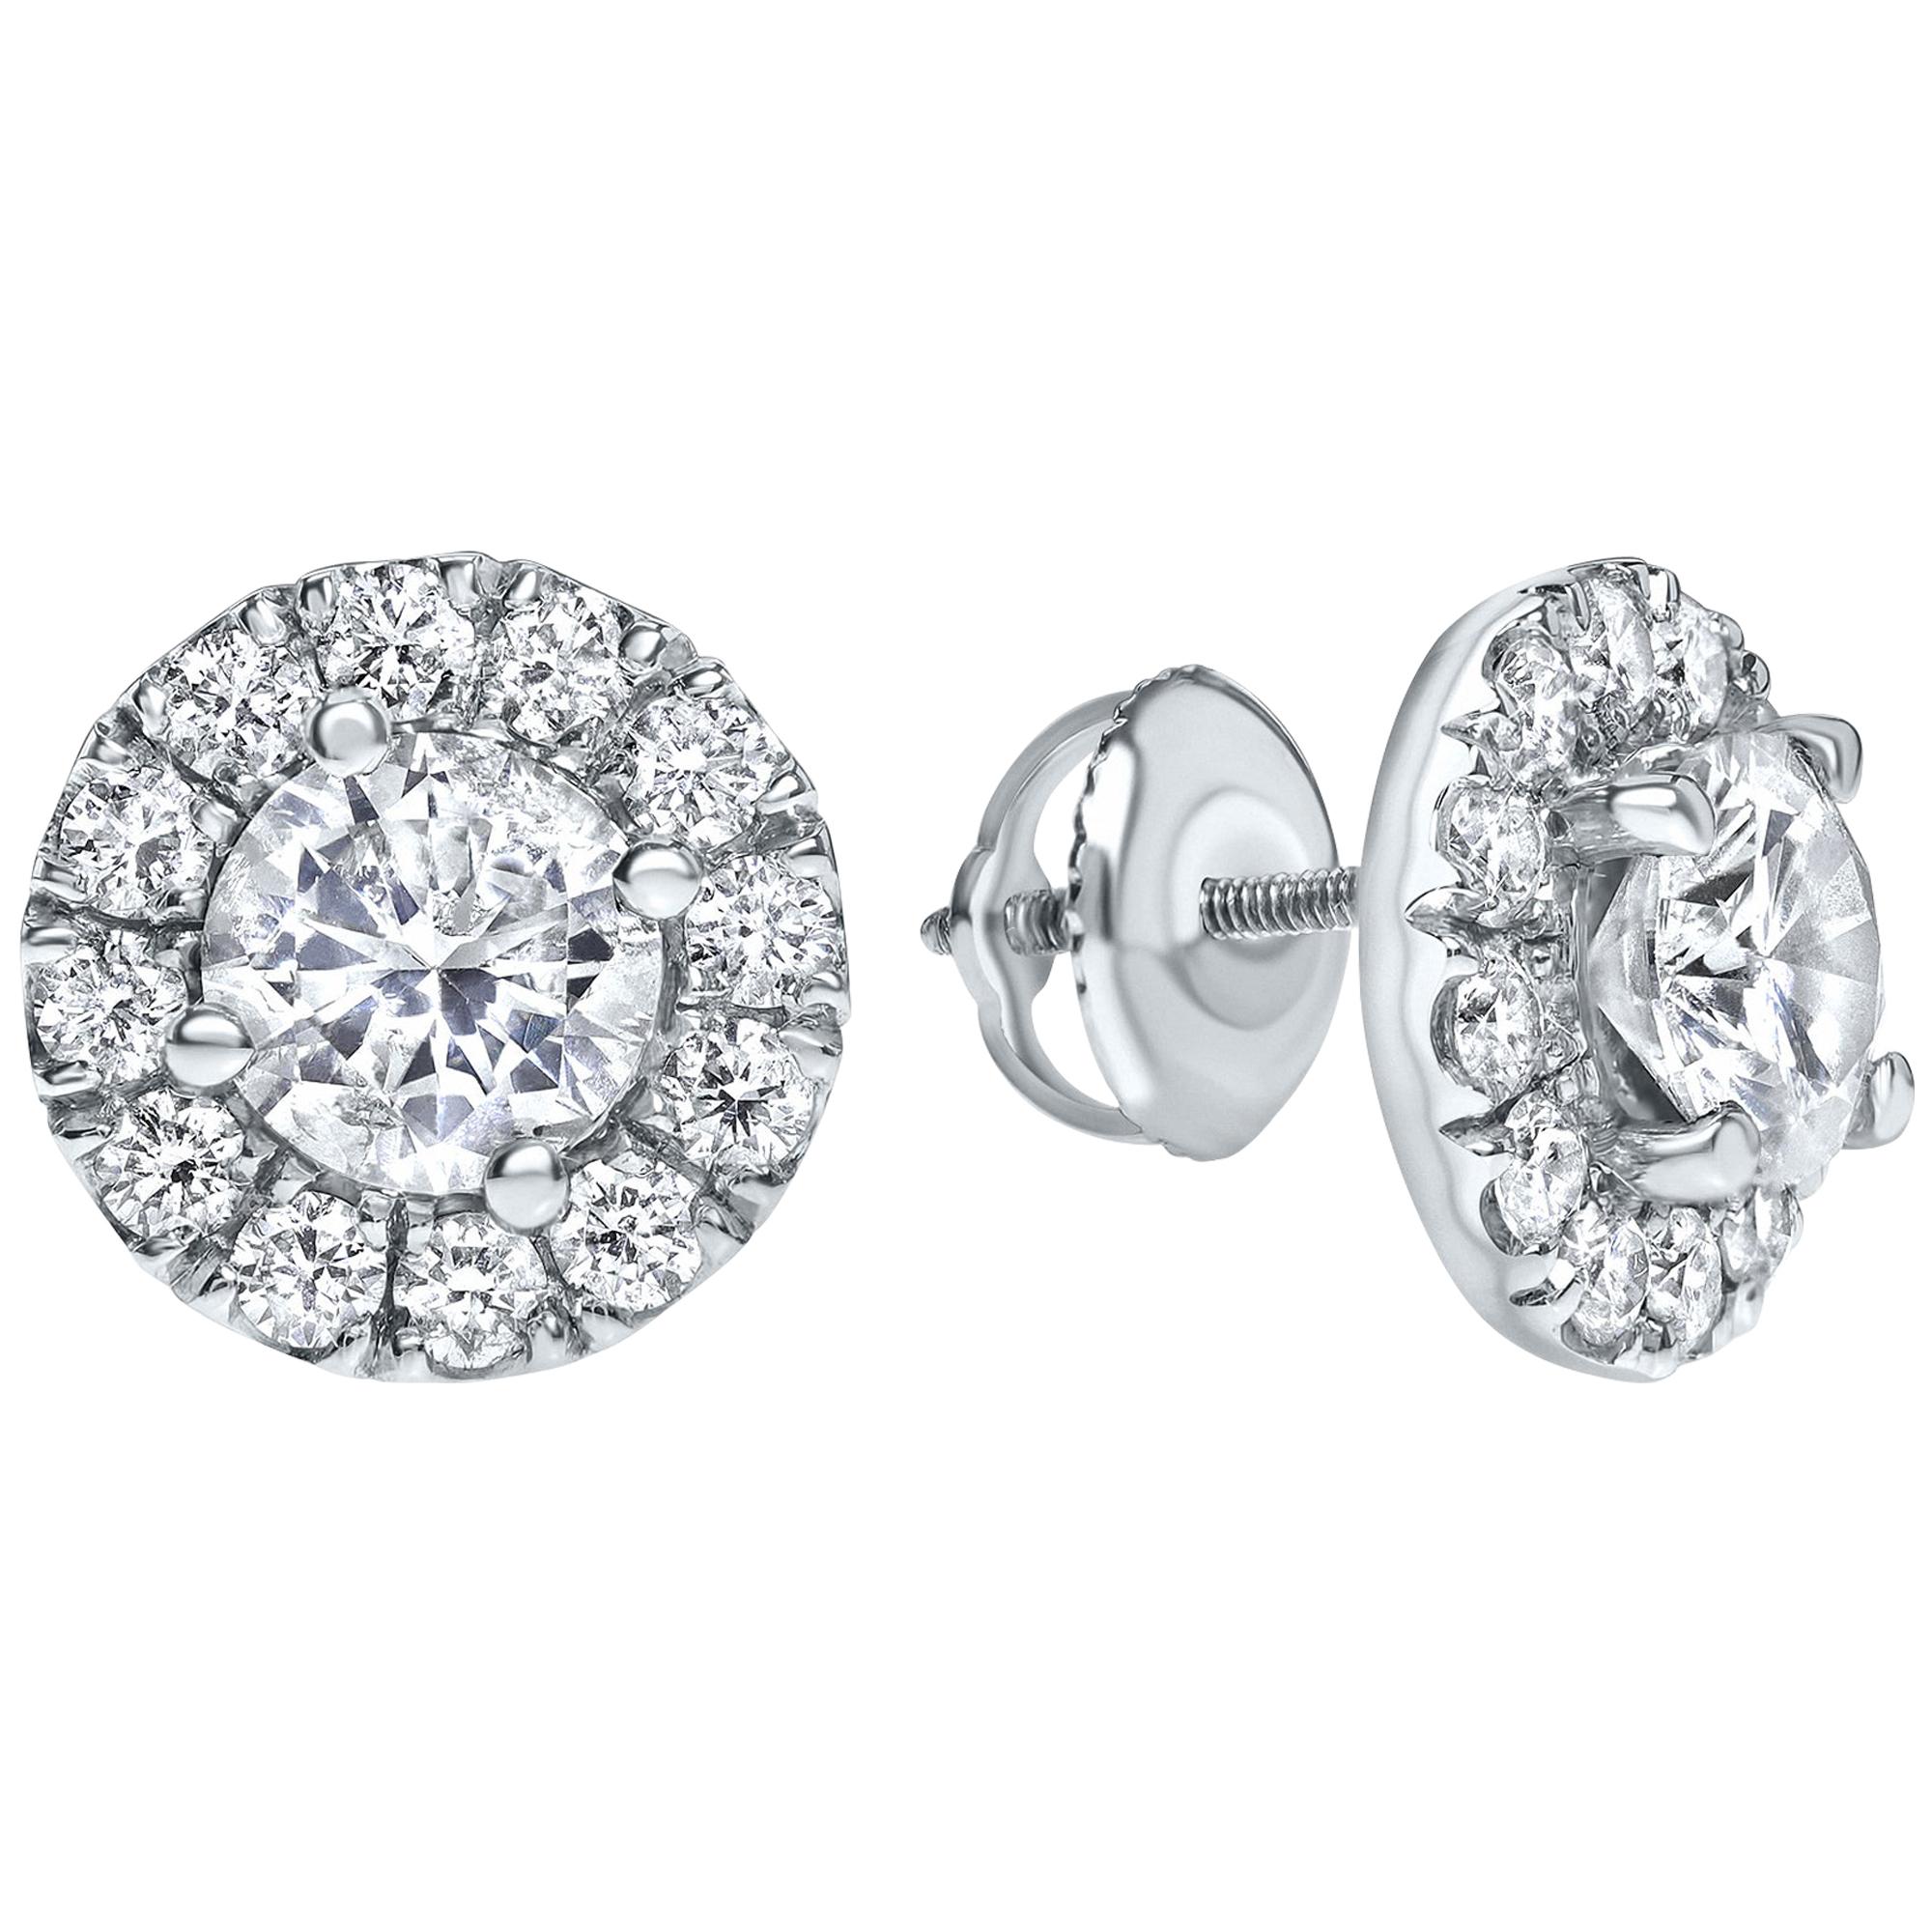 2.00 Carat Diamond Halo Earrings in 14 Karat White Gold - Shlomit Rogel